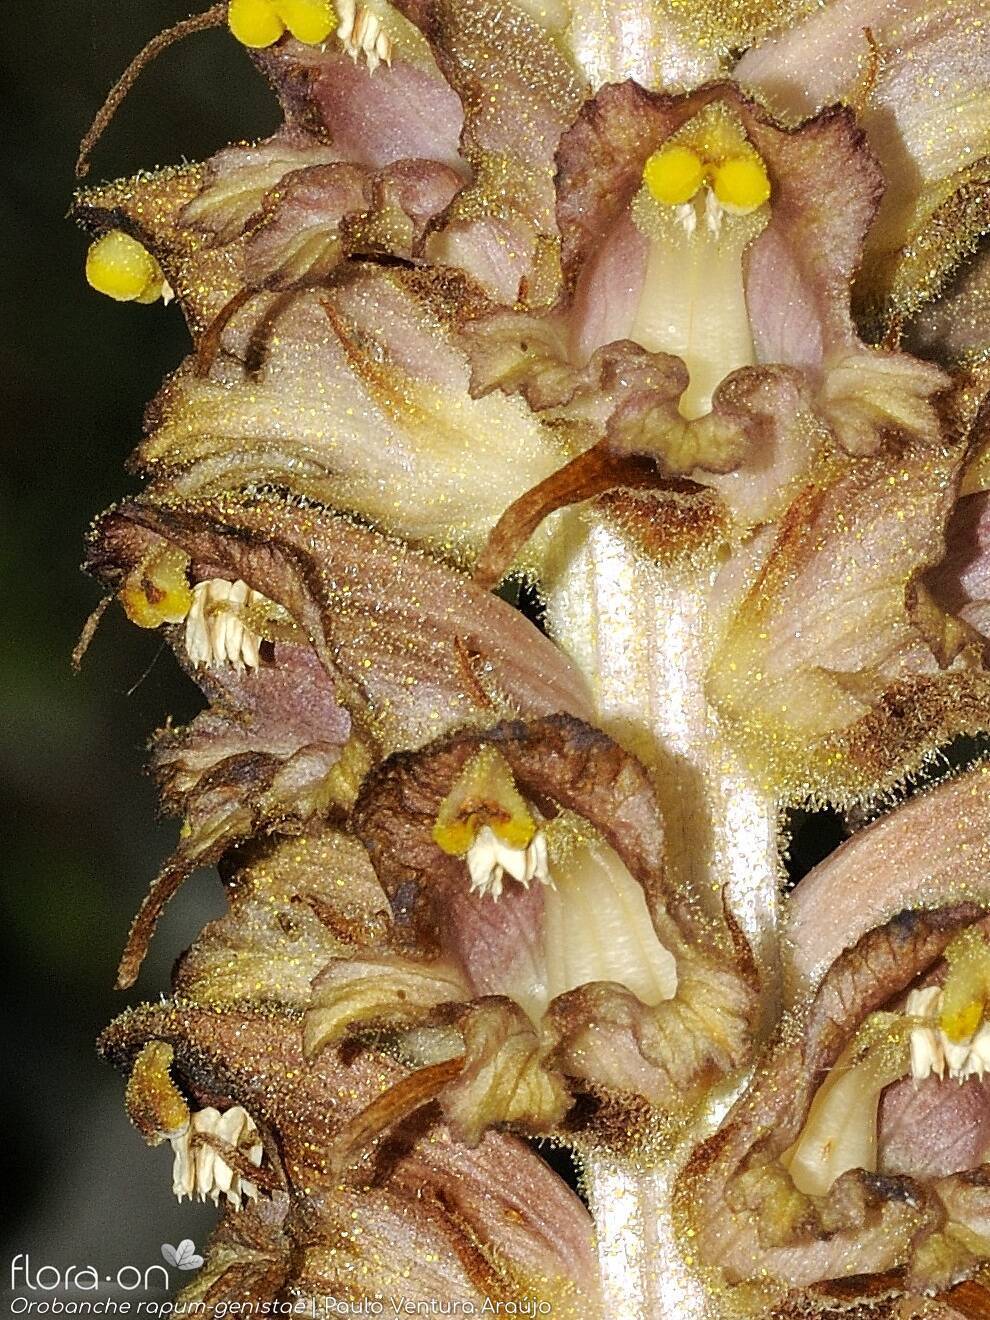 Orobanche rapum-genistae - Flor (close-up) | Paulo Ventura Araújo; CC BY-NC 4.0